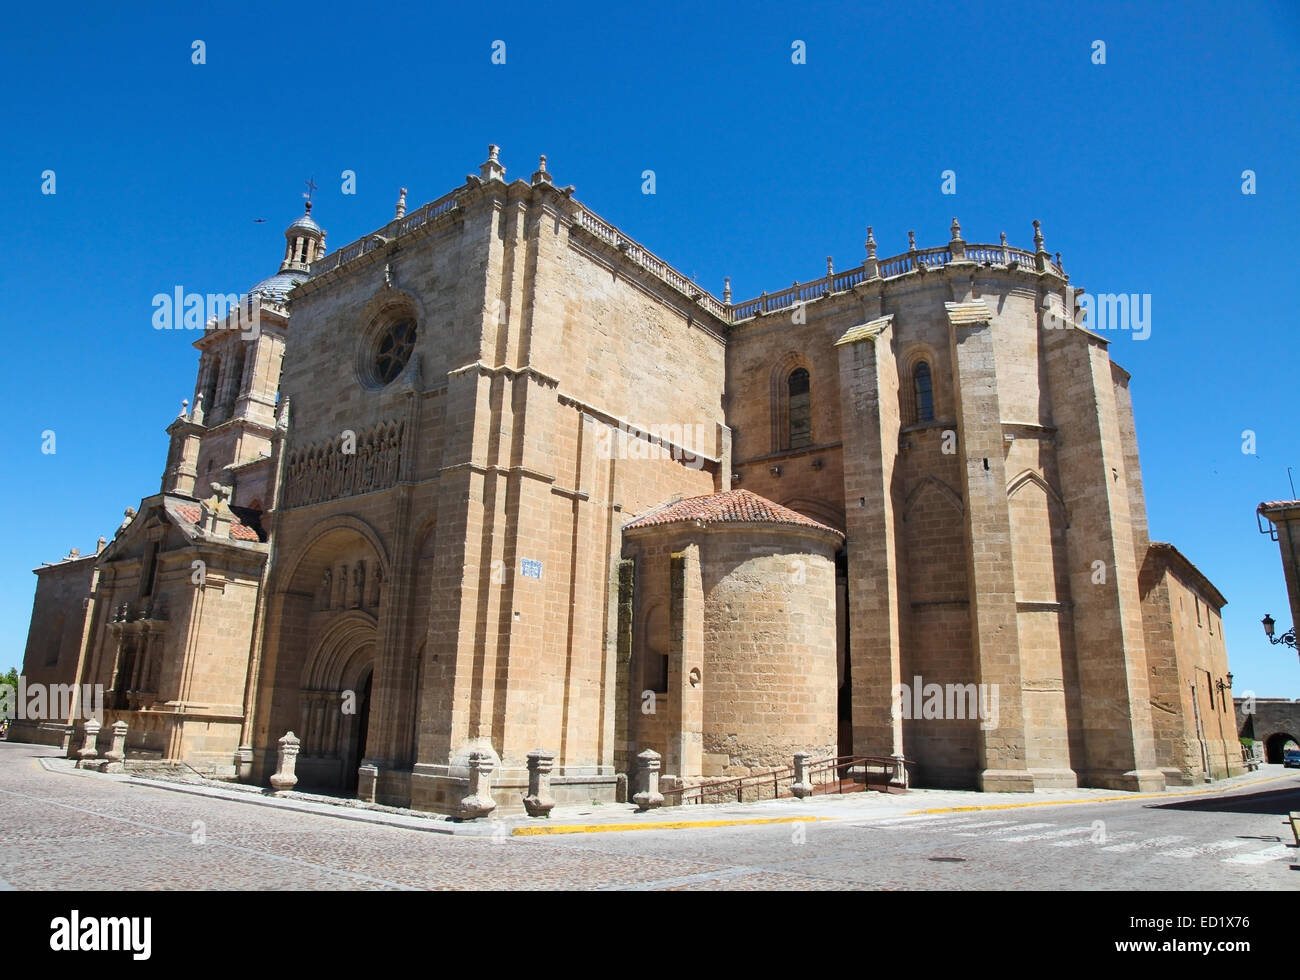 Facade of the Capilla de Cerralbo (16th Century) in Ciudad Rodrigo, a small cathedral city in the province of Salamanca, Spain. Stock Photo